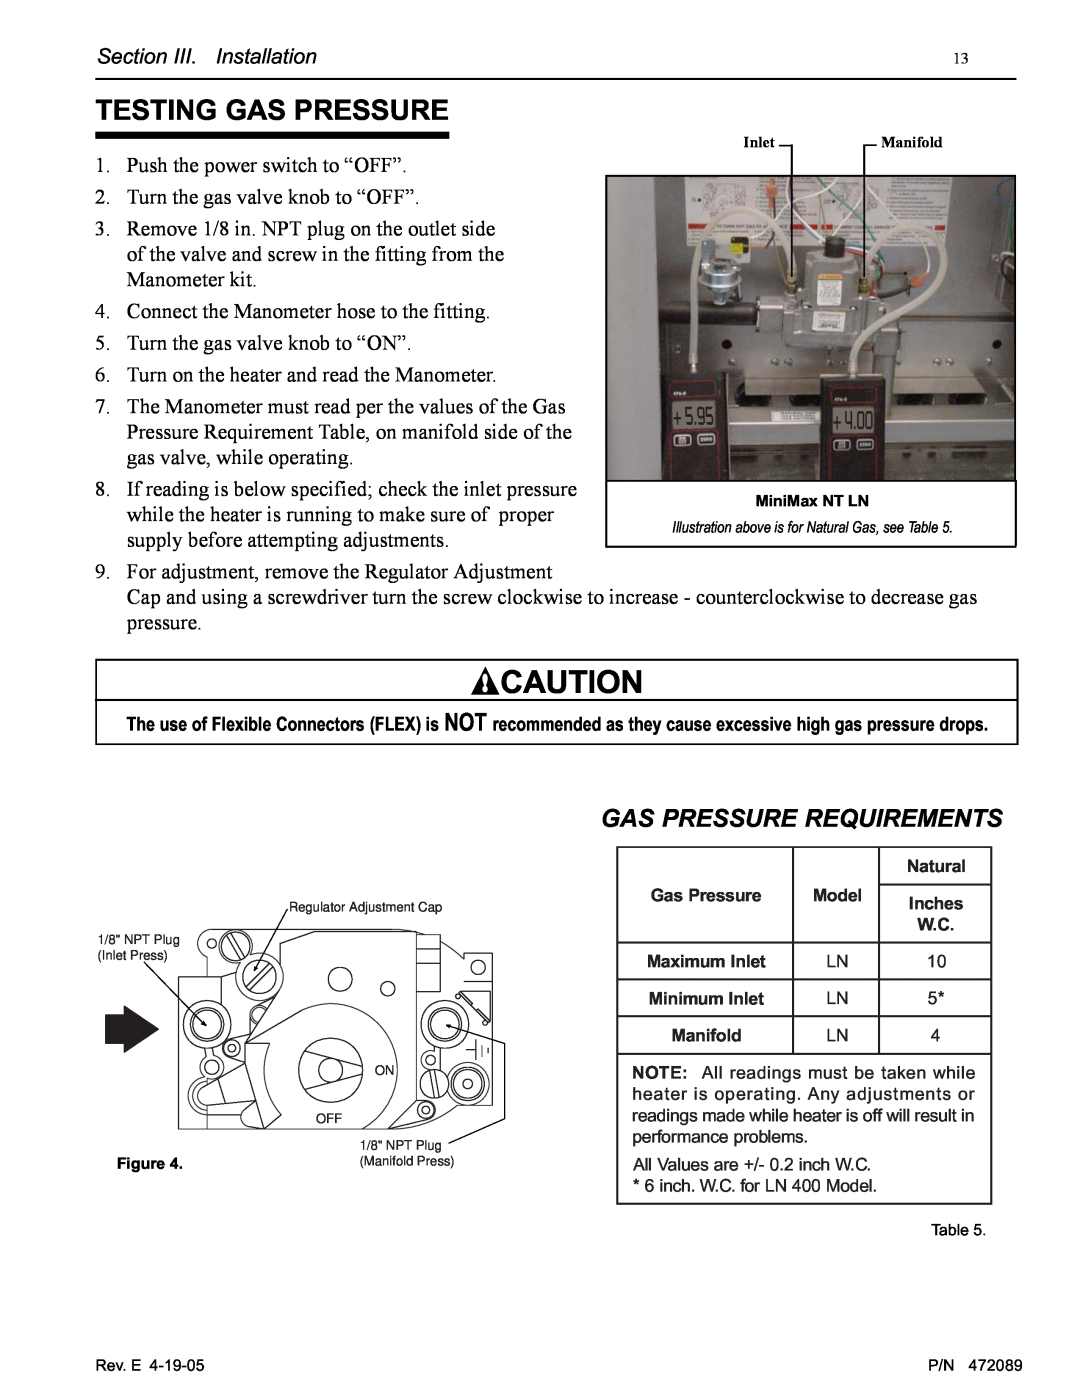 Pentair MiniMax NT LN installation manual Testing Gas Pressure, Gas Pressure Requirements 